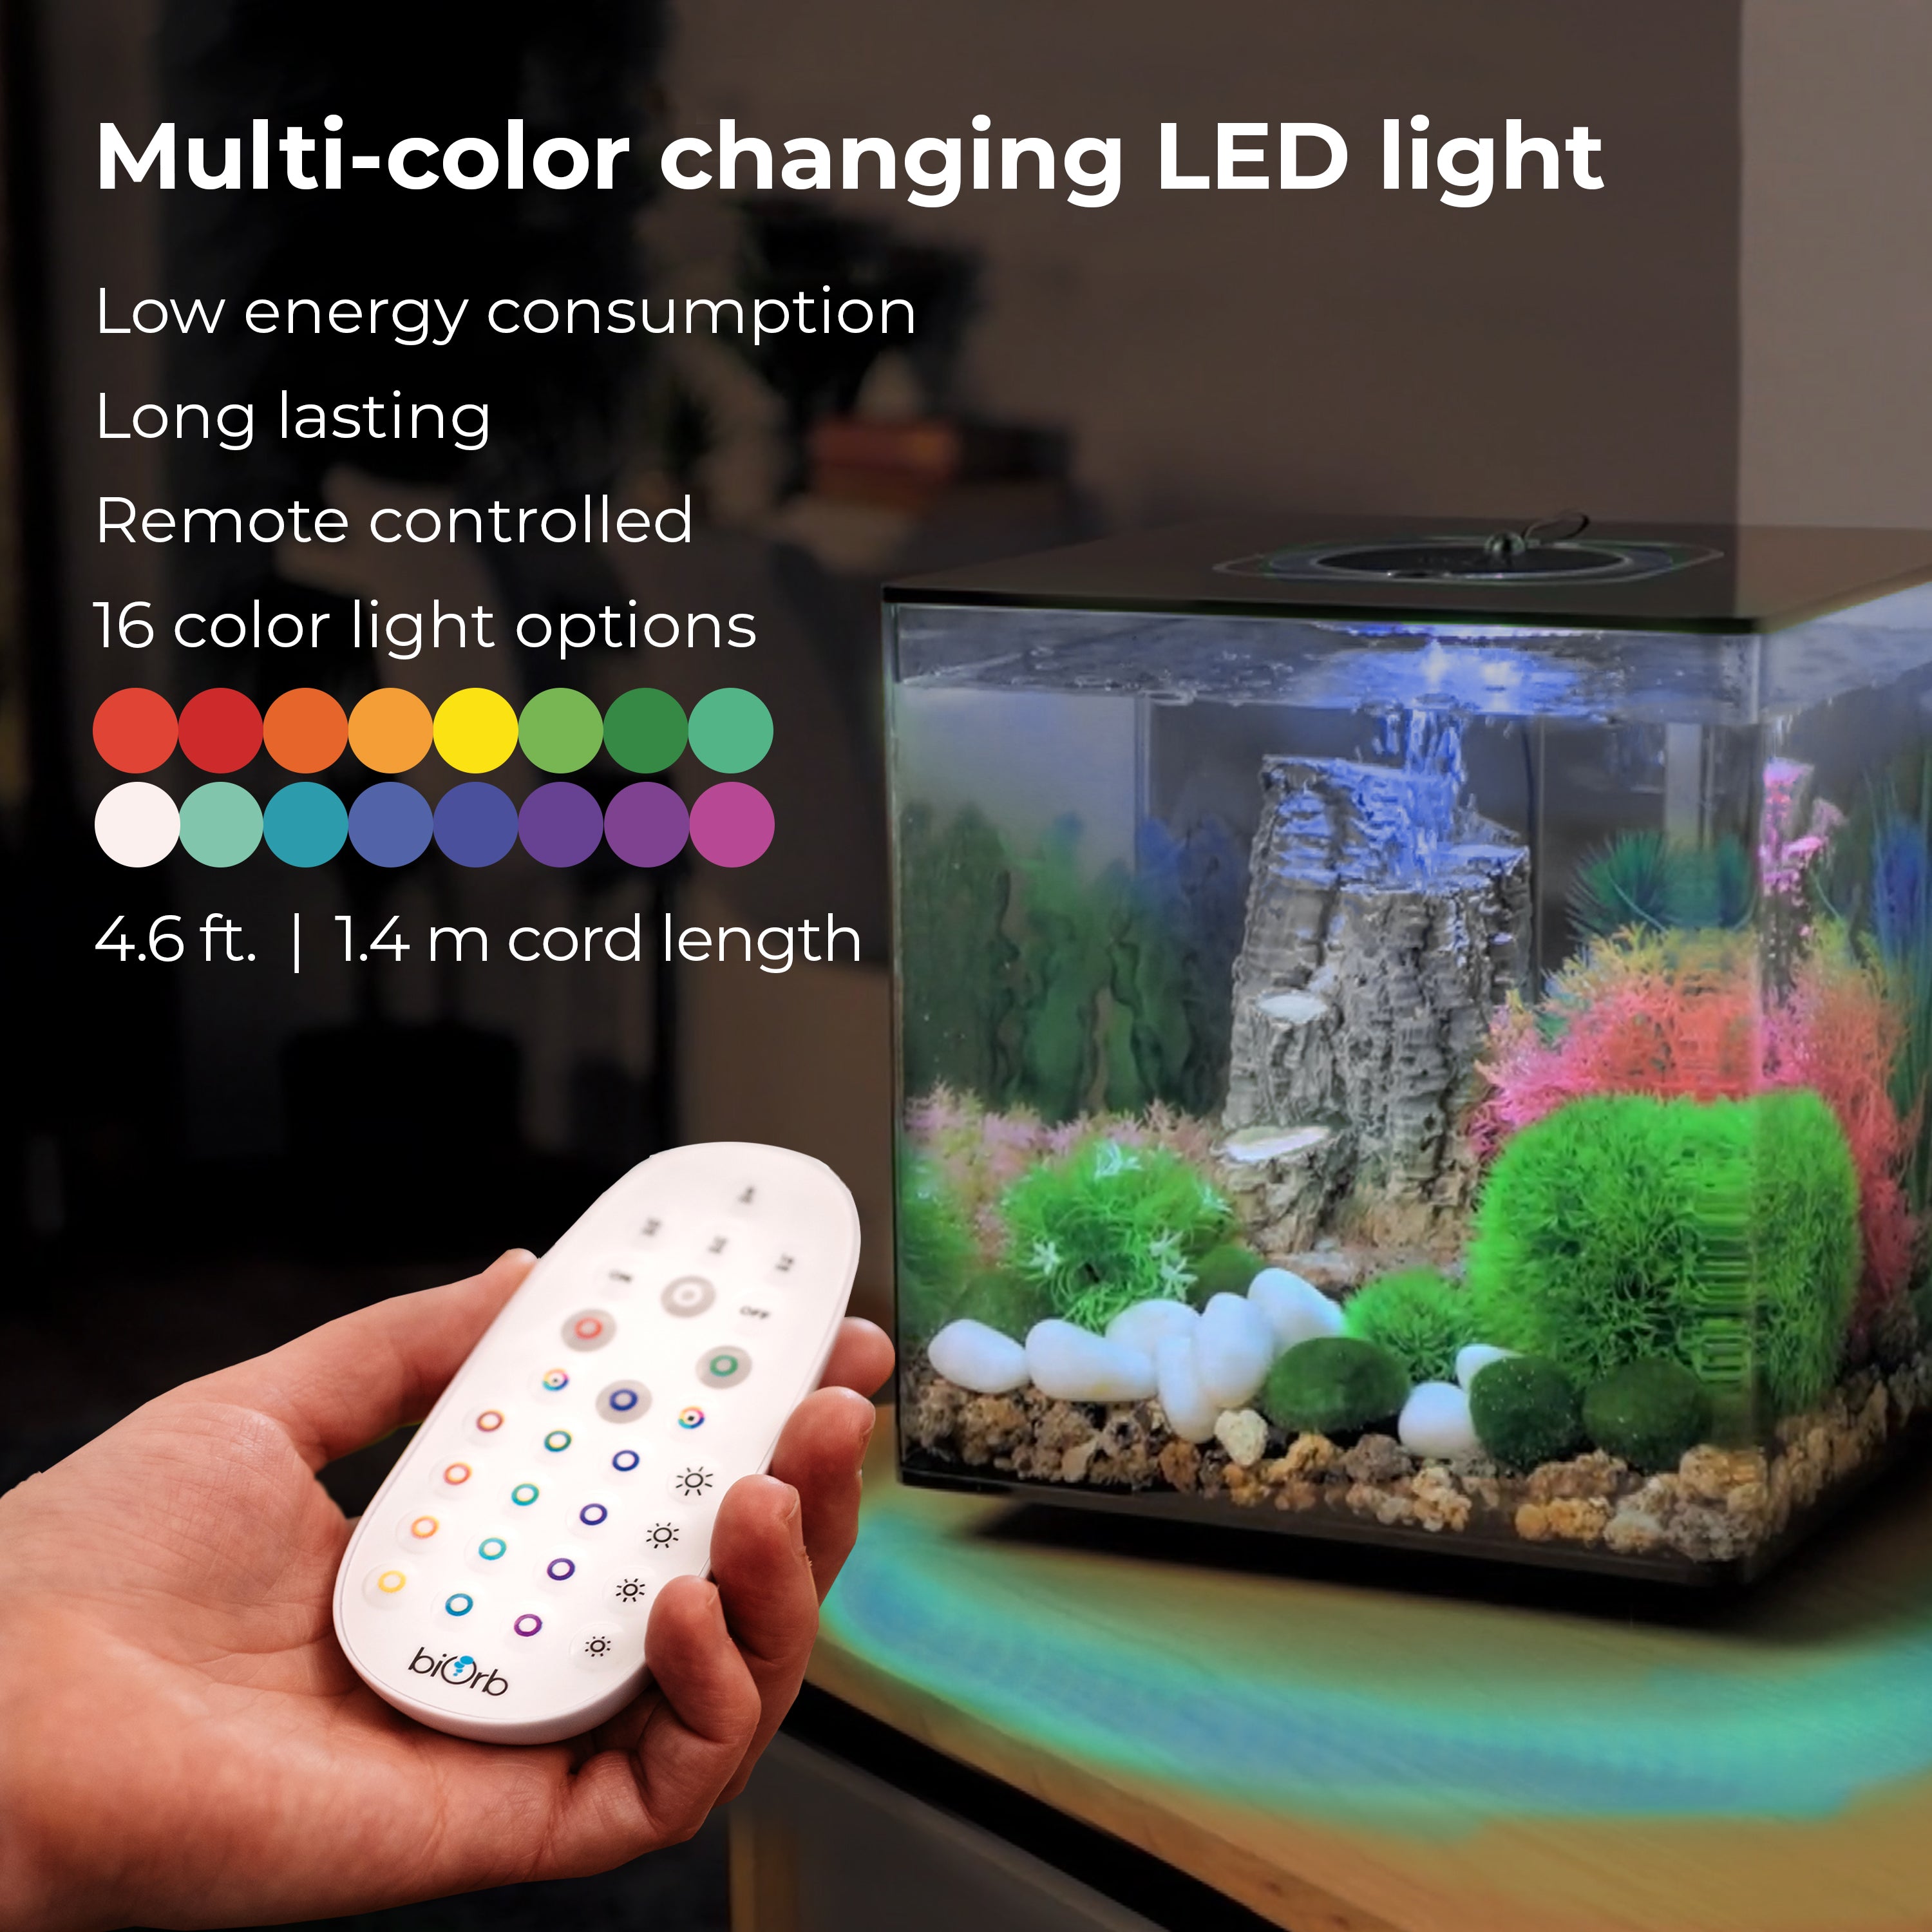 CUBE 30 Aquarium with MCR Light - 8 gallon features Multi-color changing LED light